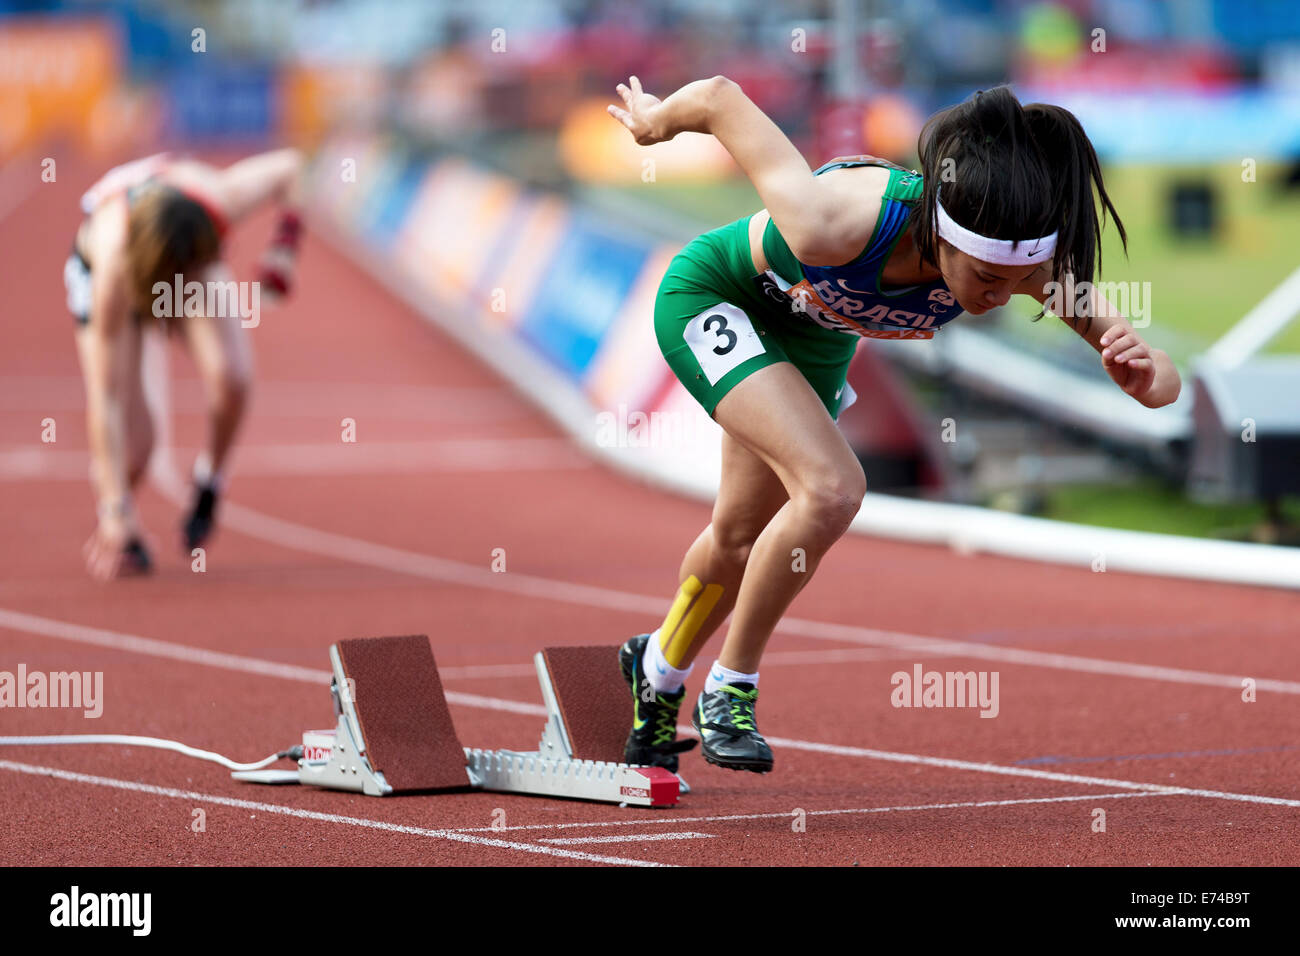 Veronica HIPOLITO, Women's 400m T 37-38, 2014 CIB Sainsbury's Grand Prix de Birmingham, Alexander Stadium, UK Banque D'Images